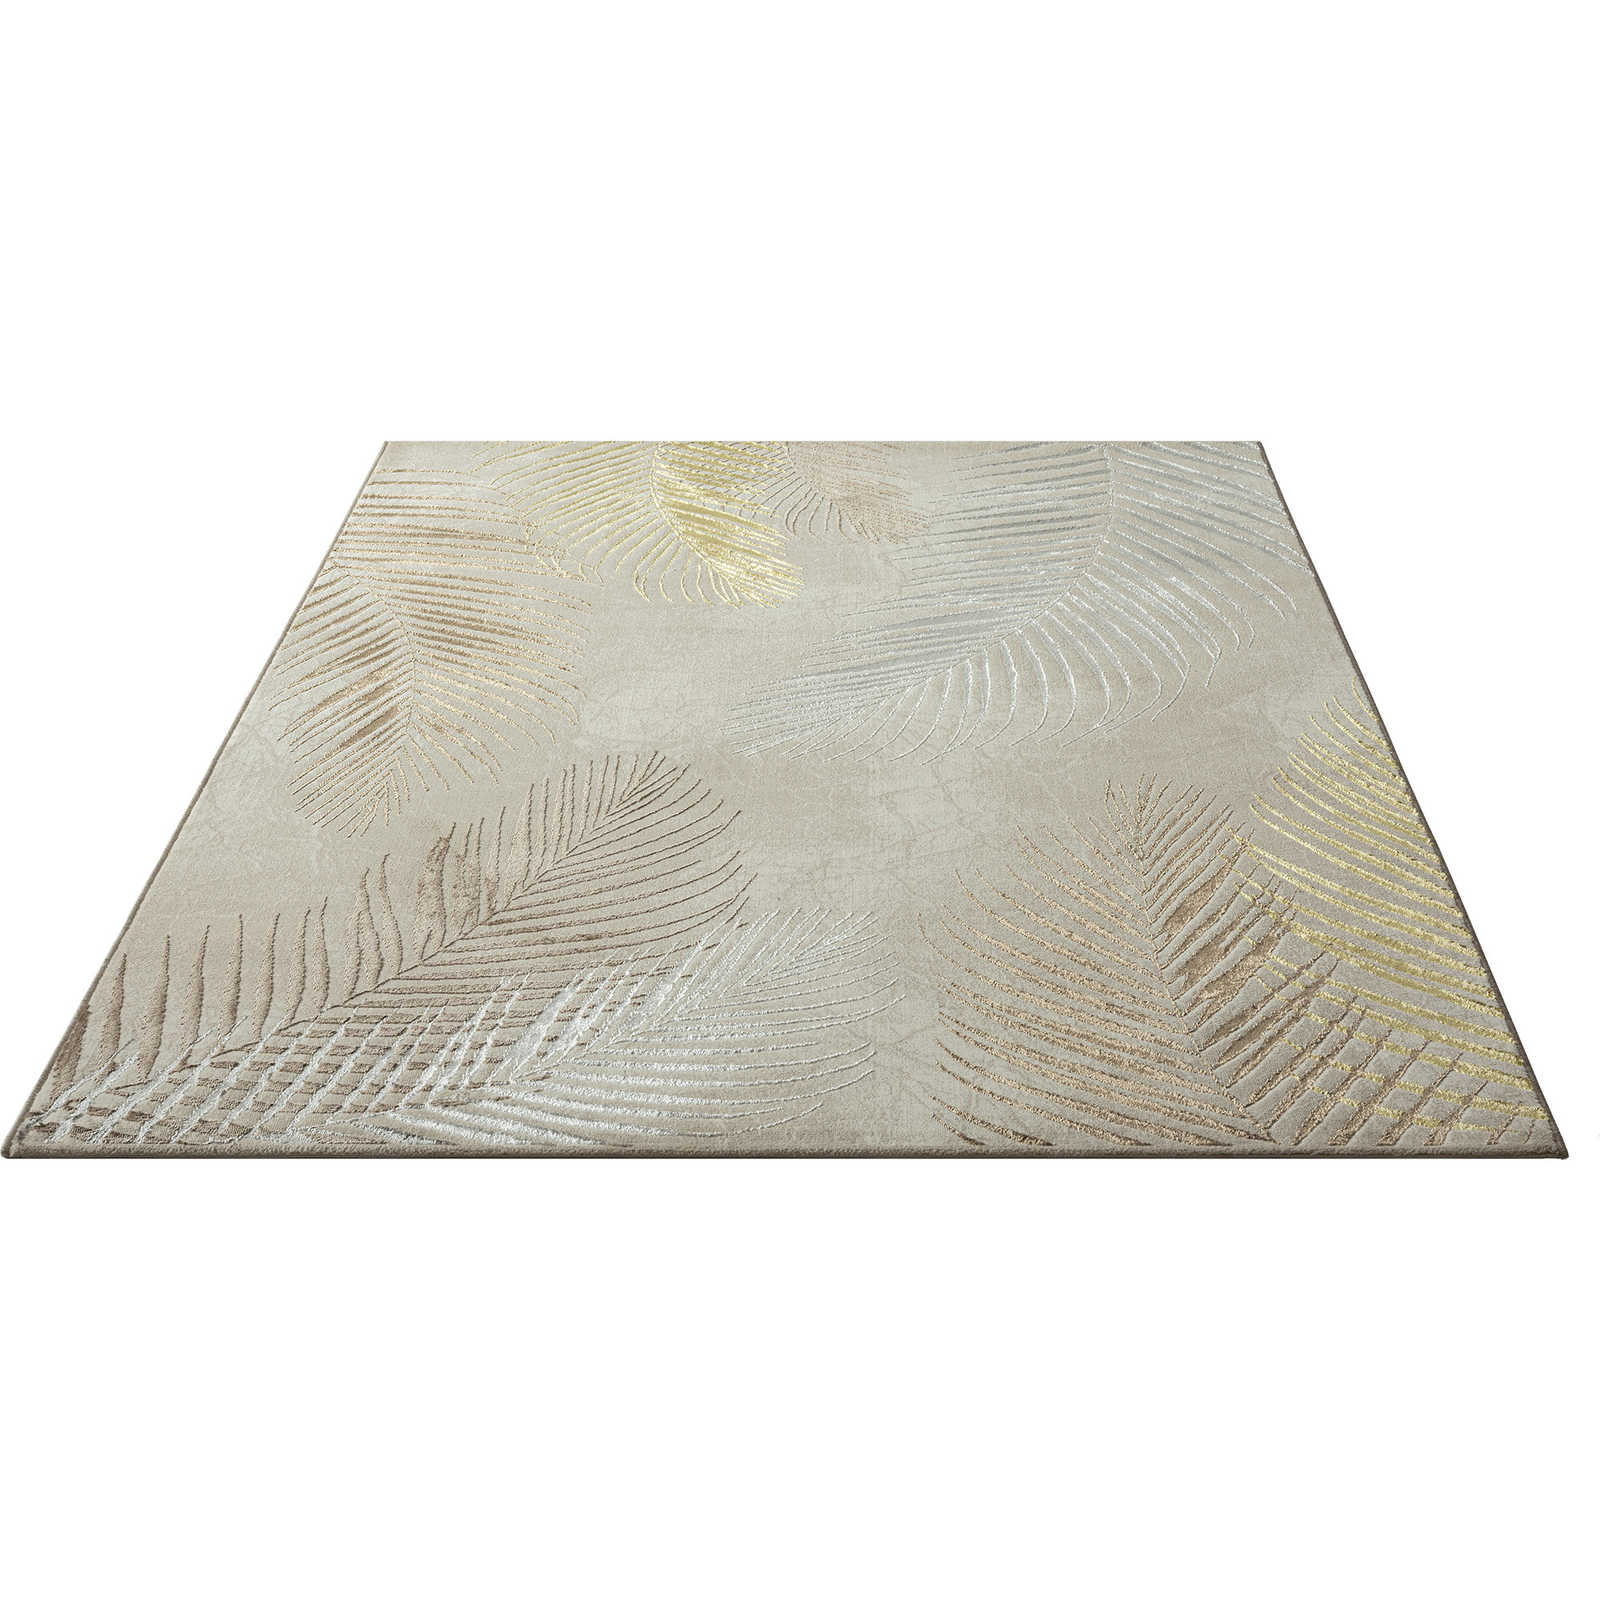 soft cream high pile carpet - 340 x 240 cm
